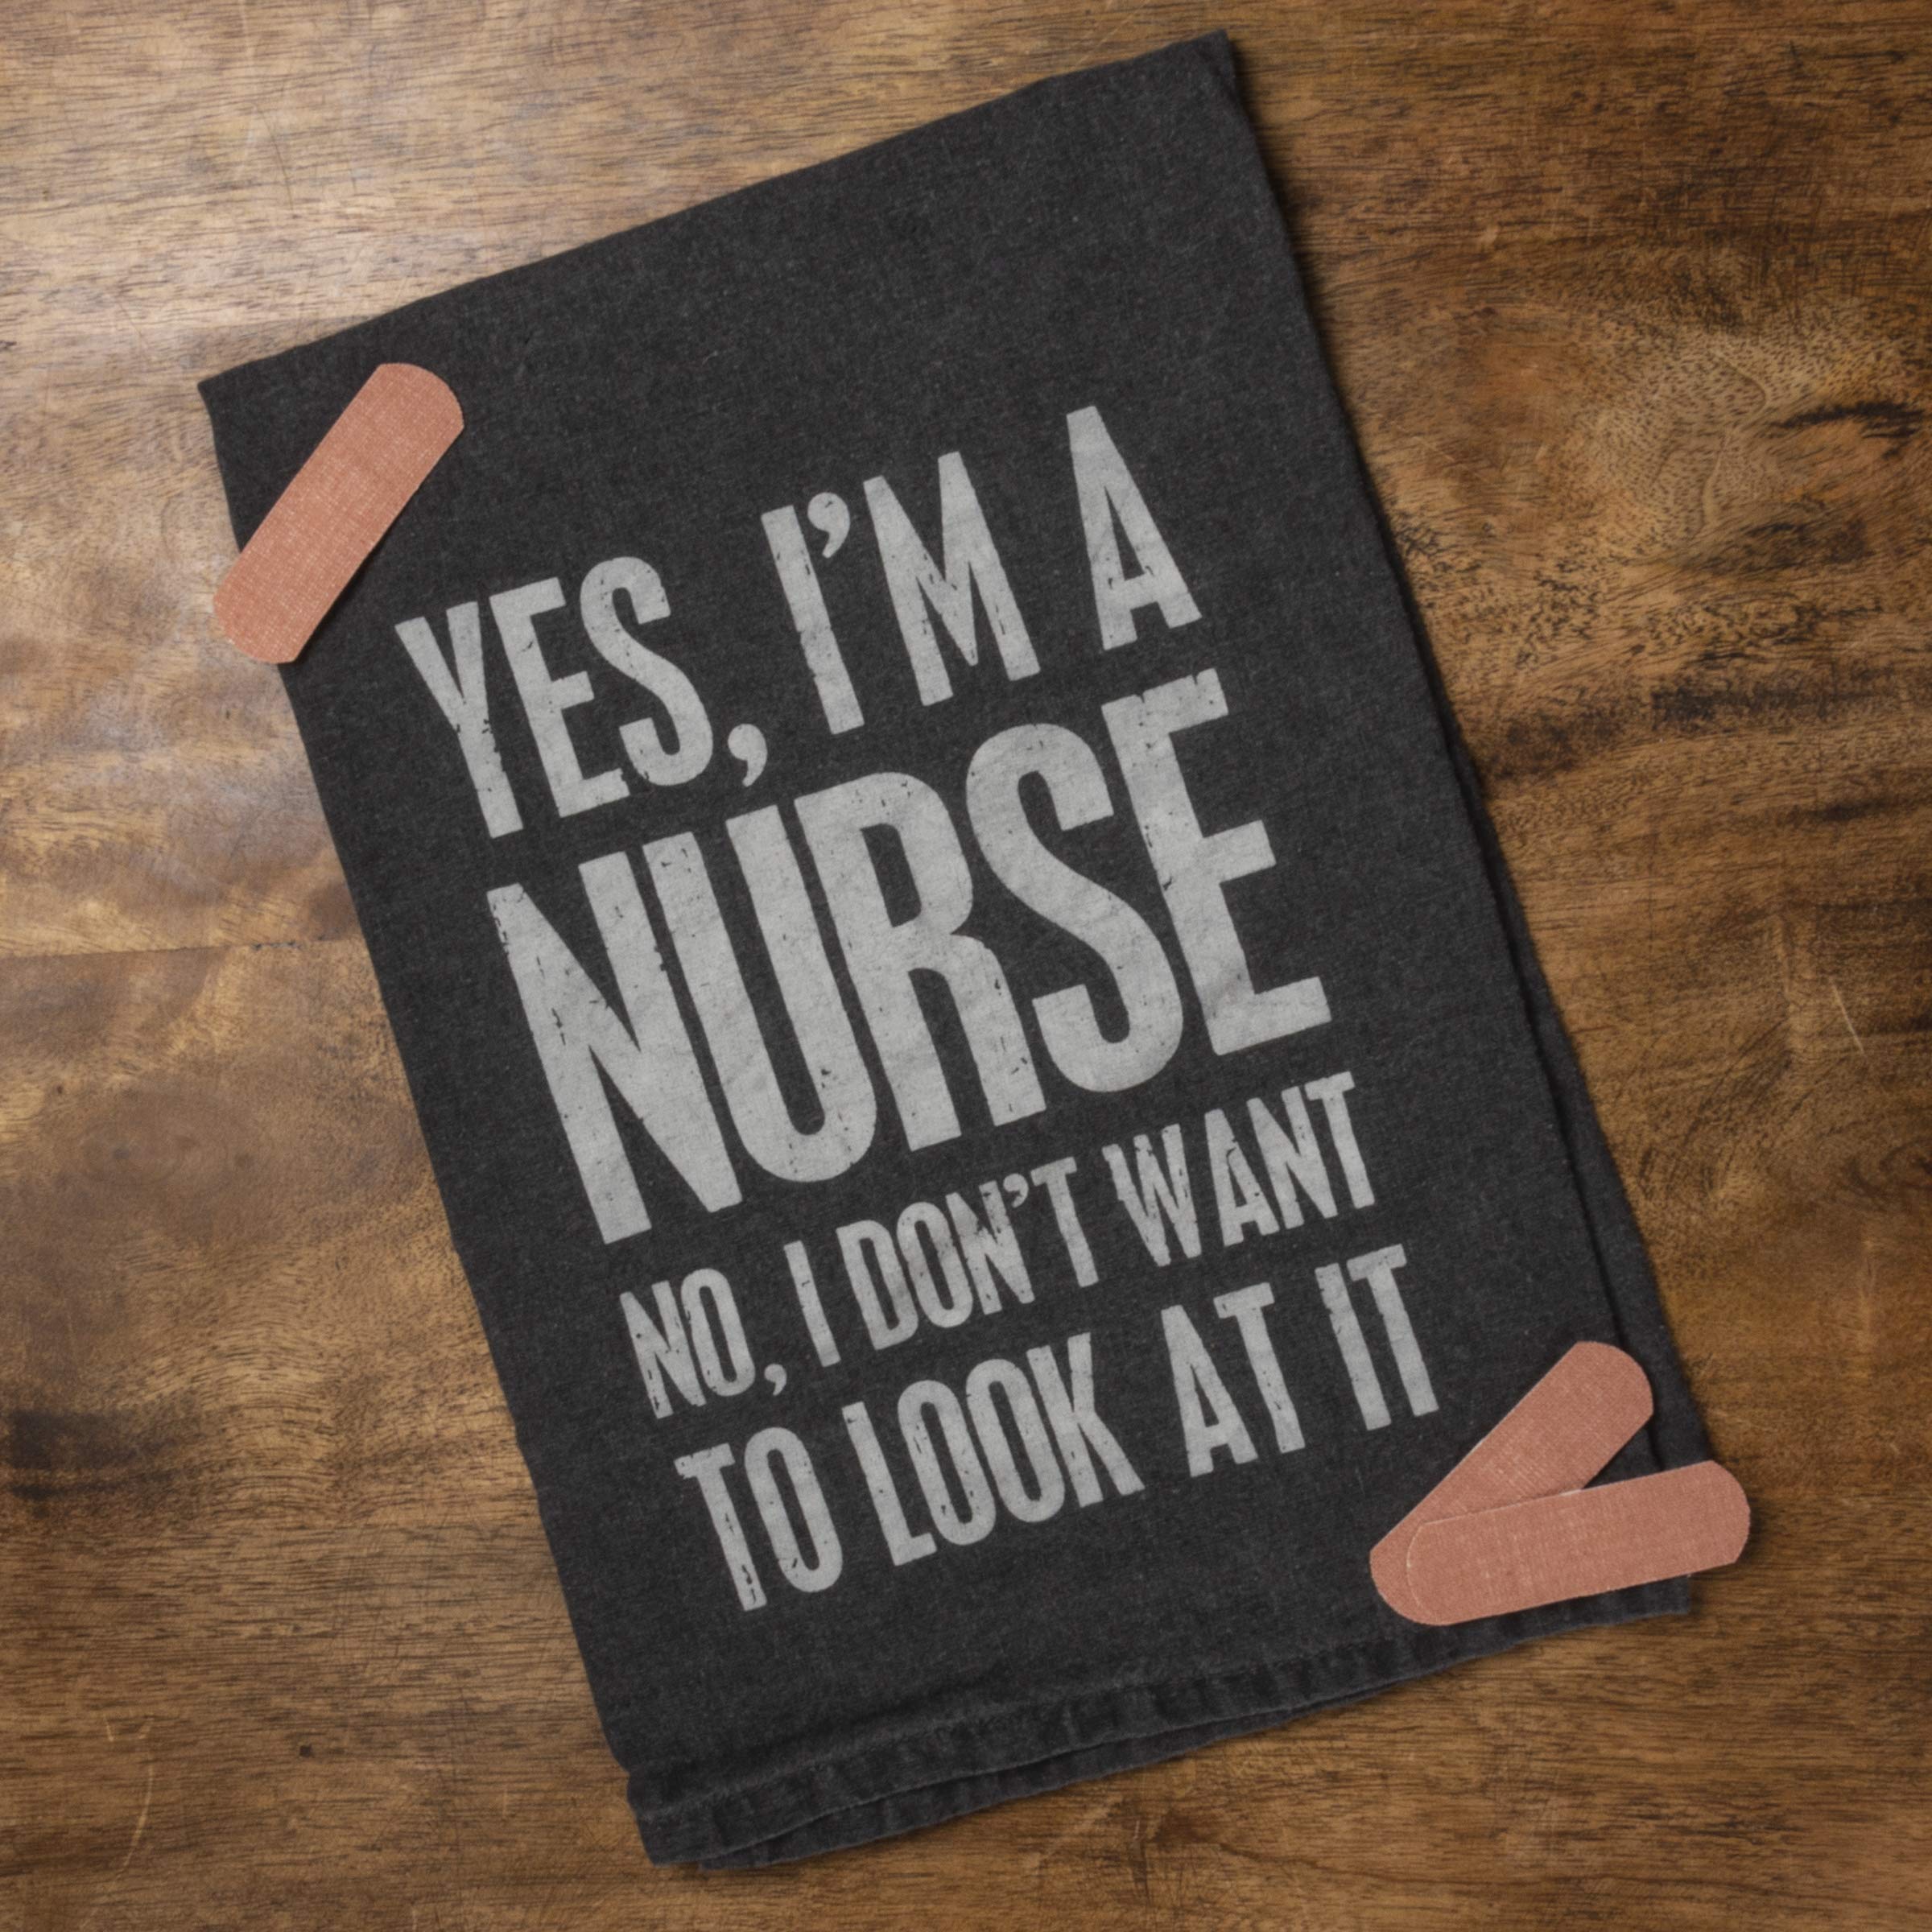 Primitives by Kathy Dish Towel, 28"x 28", Yes, I'm a Nurse